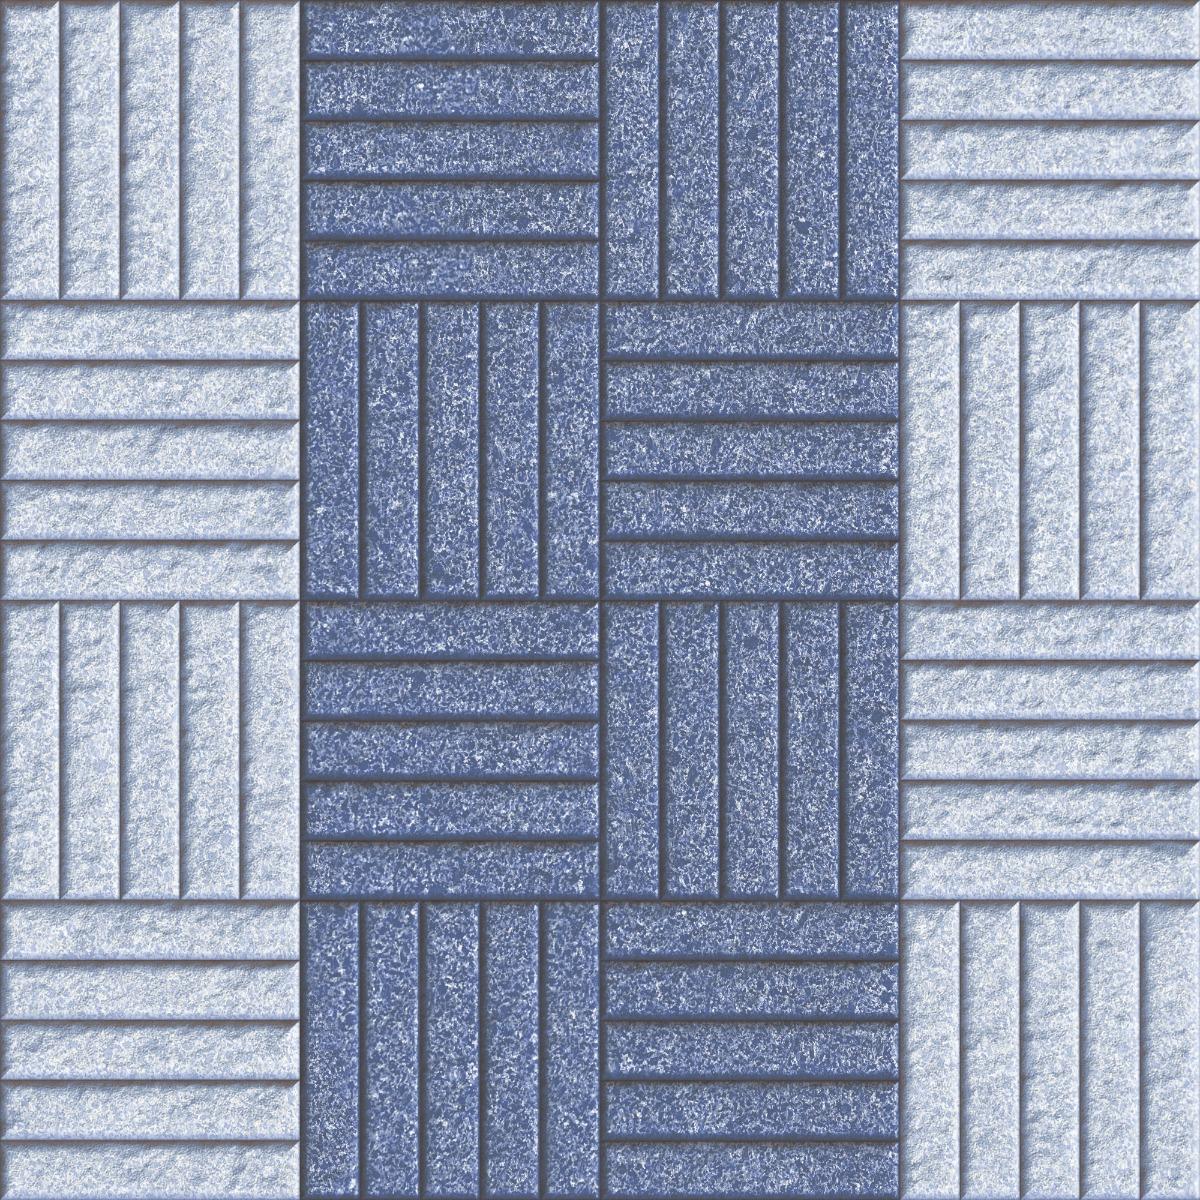 Floor Tiles for Commercial Tiles, Parking Tiles, Office Tiles, Pathway Tiles, Hospital Tiles, High Traffic Tiles, Bar/Restaurant, Outdoor Area, Porch/Parking